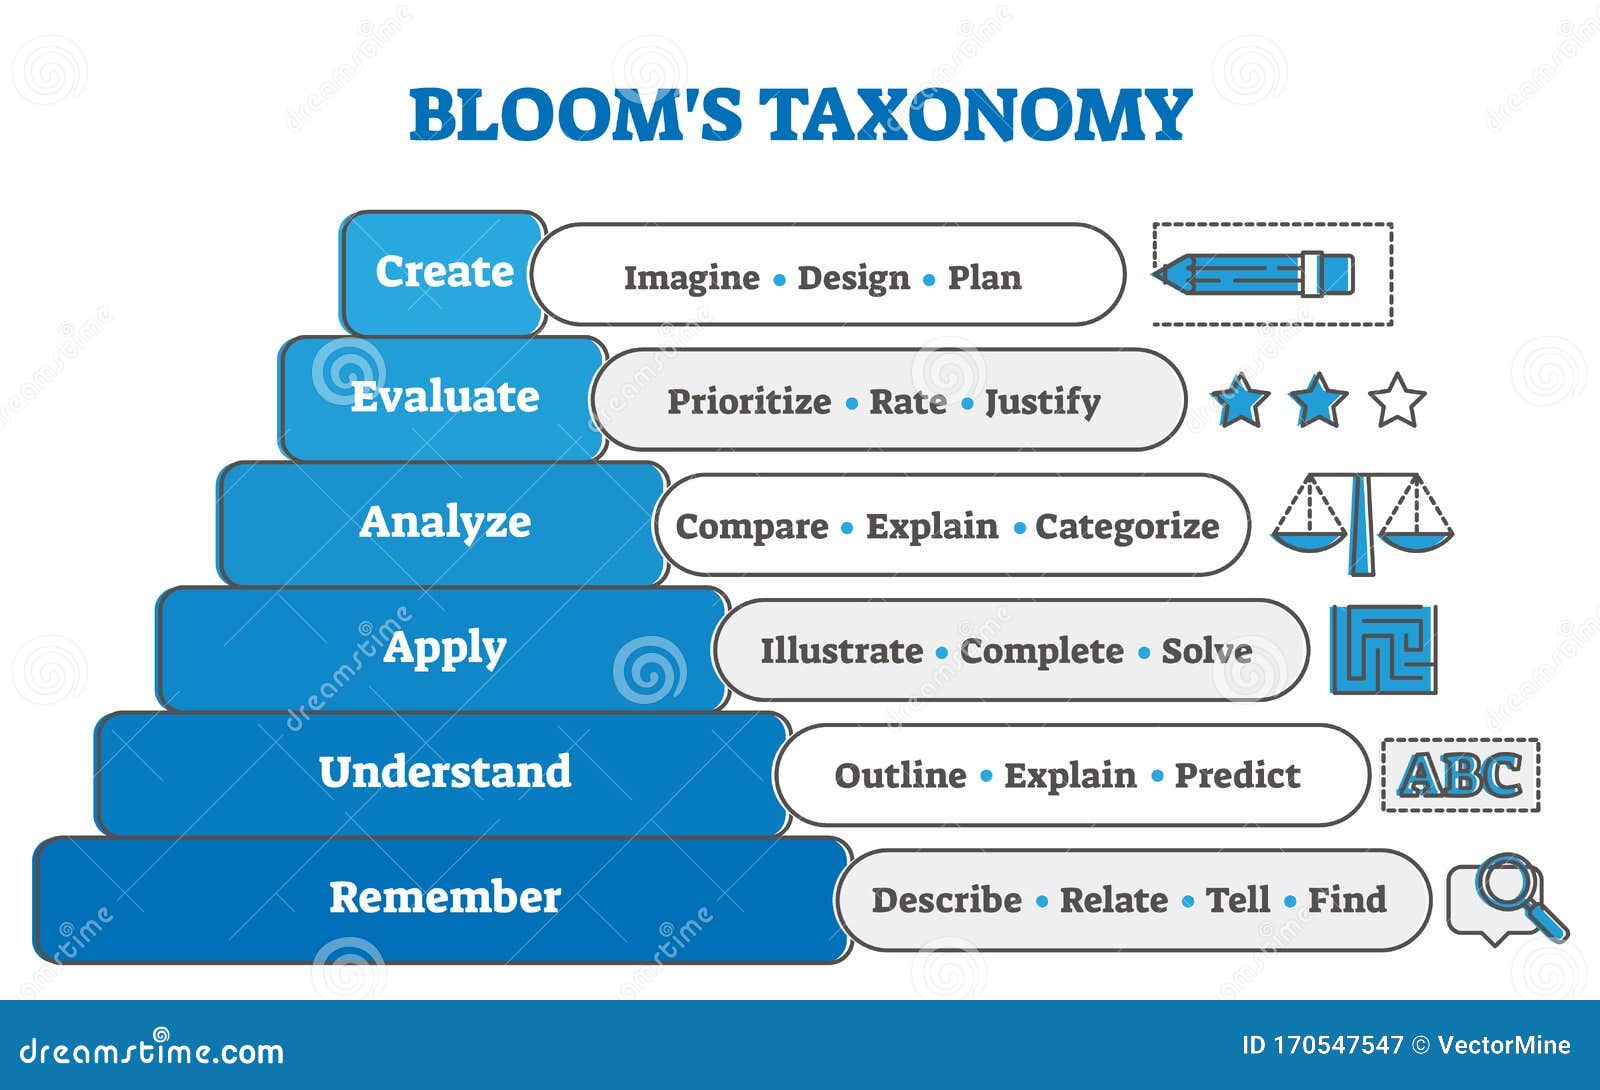 blooms taxonomy educational pyramid diagram